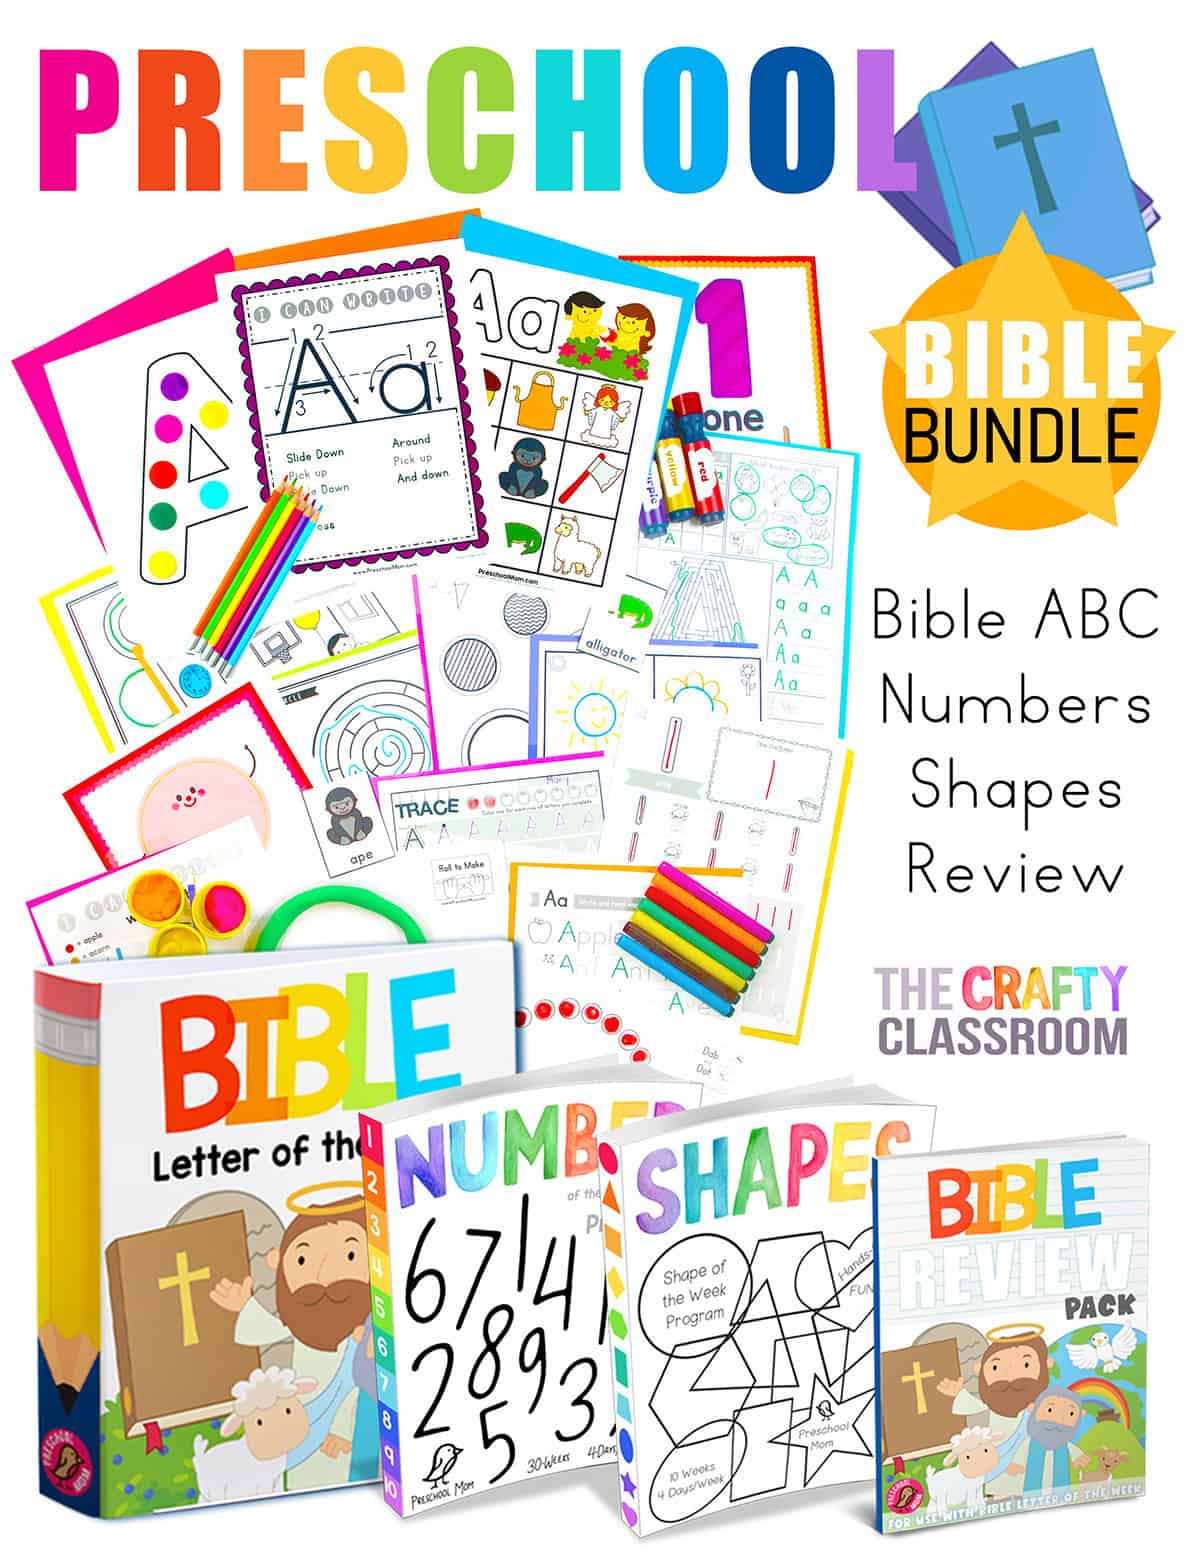 Children Bible Lesson Coloring Pages